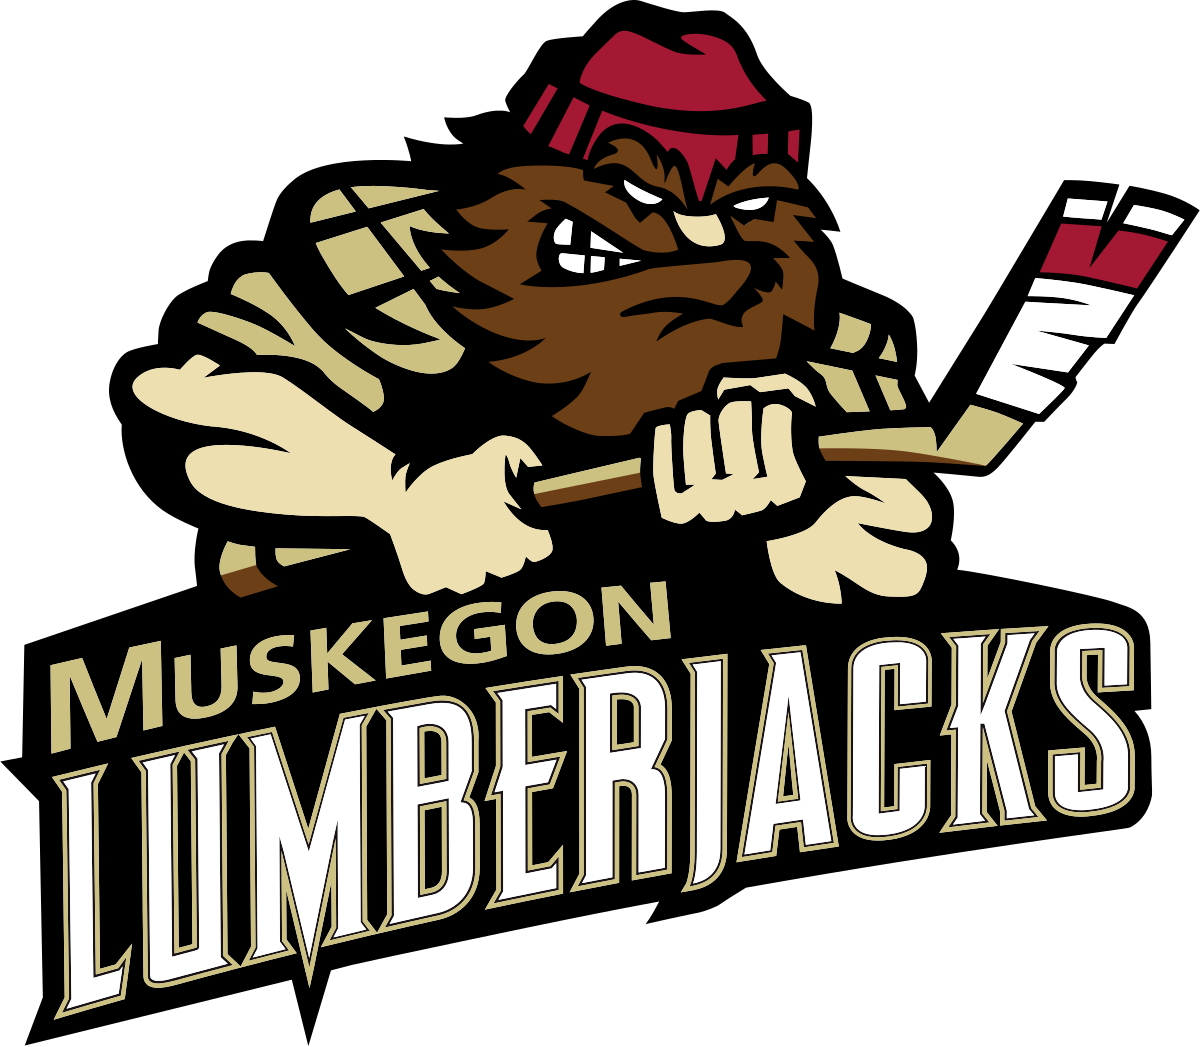 Muskegon Lumberjacks - Wikipedia